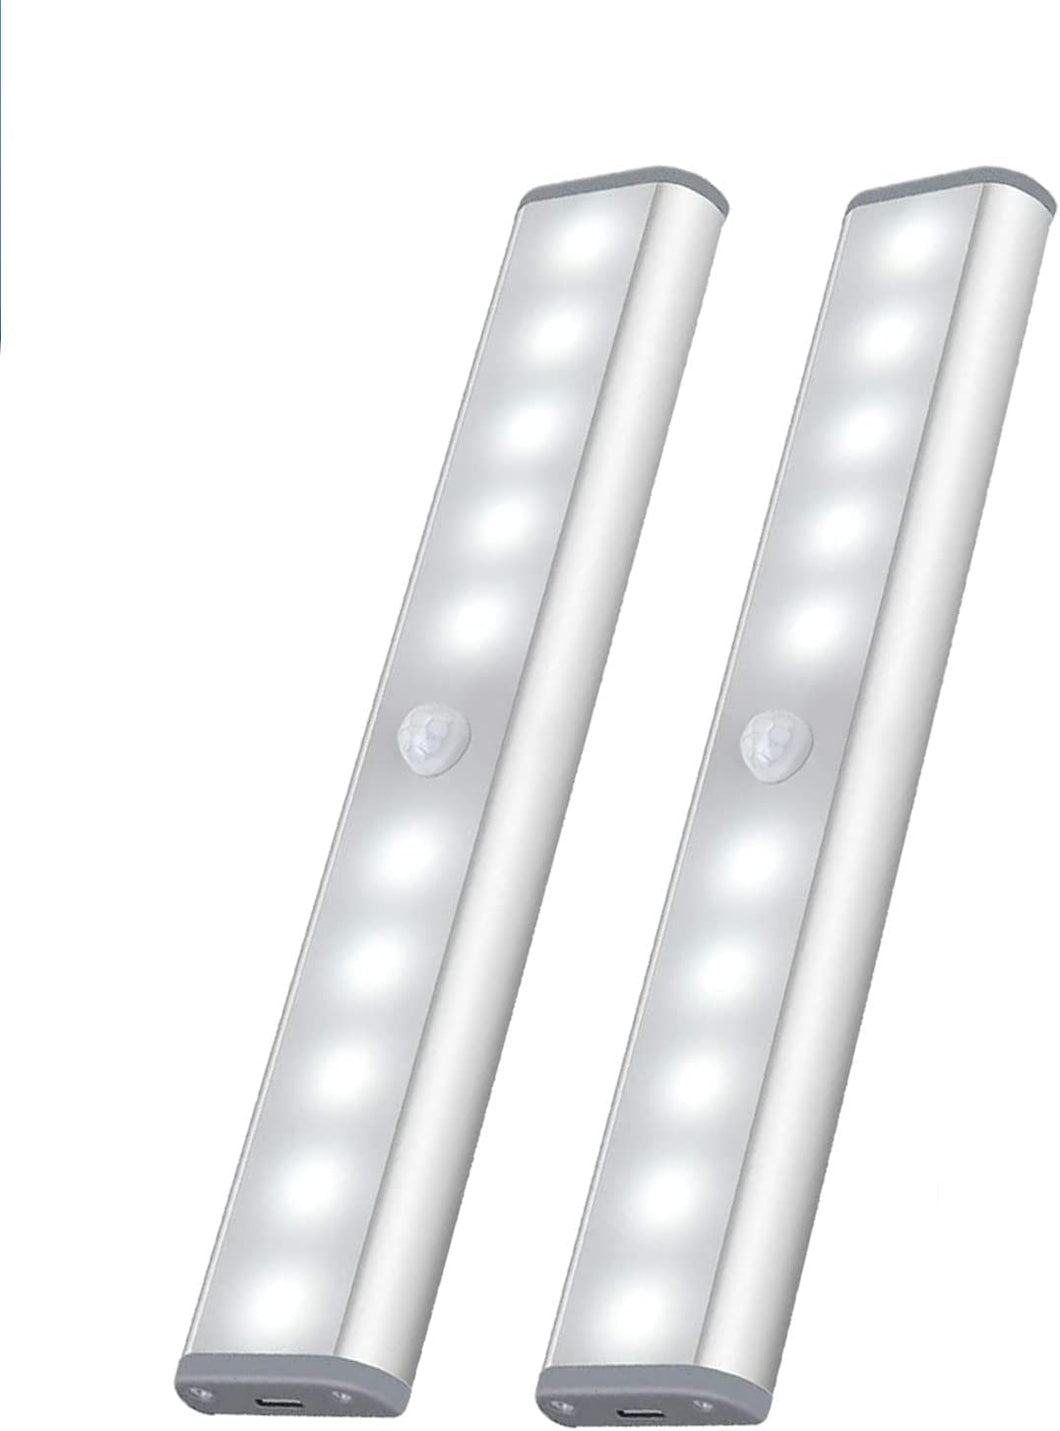 10 LED under Cabinet Lights, under Cabinet Light,Closet Lights Motion Sensor Light,Usb Rechargeable Stick-On Stairs Step Light Bar, LED Night Light Magnetic Closet Lighting, (2 Pack)